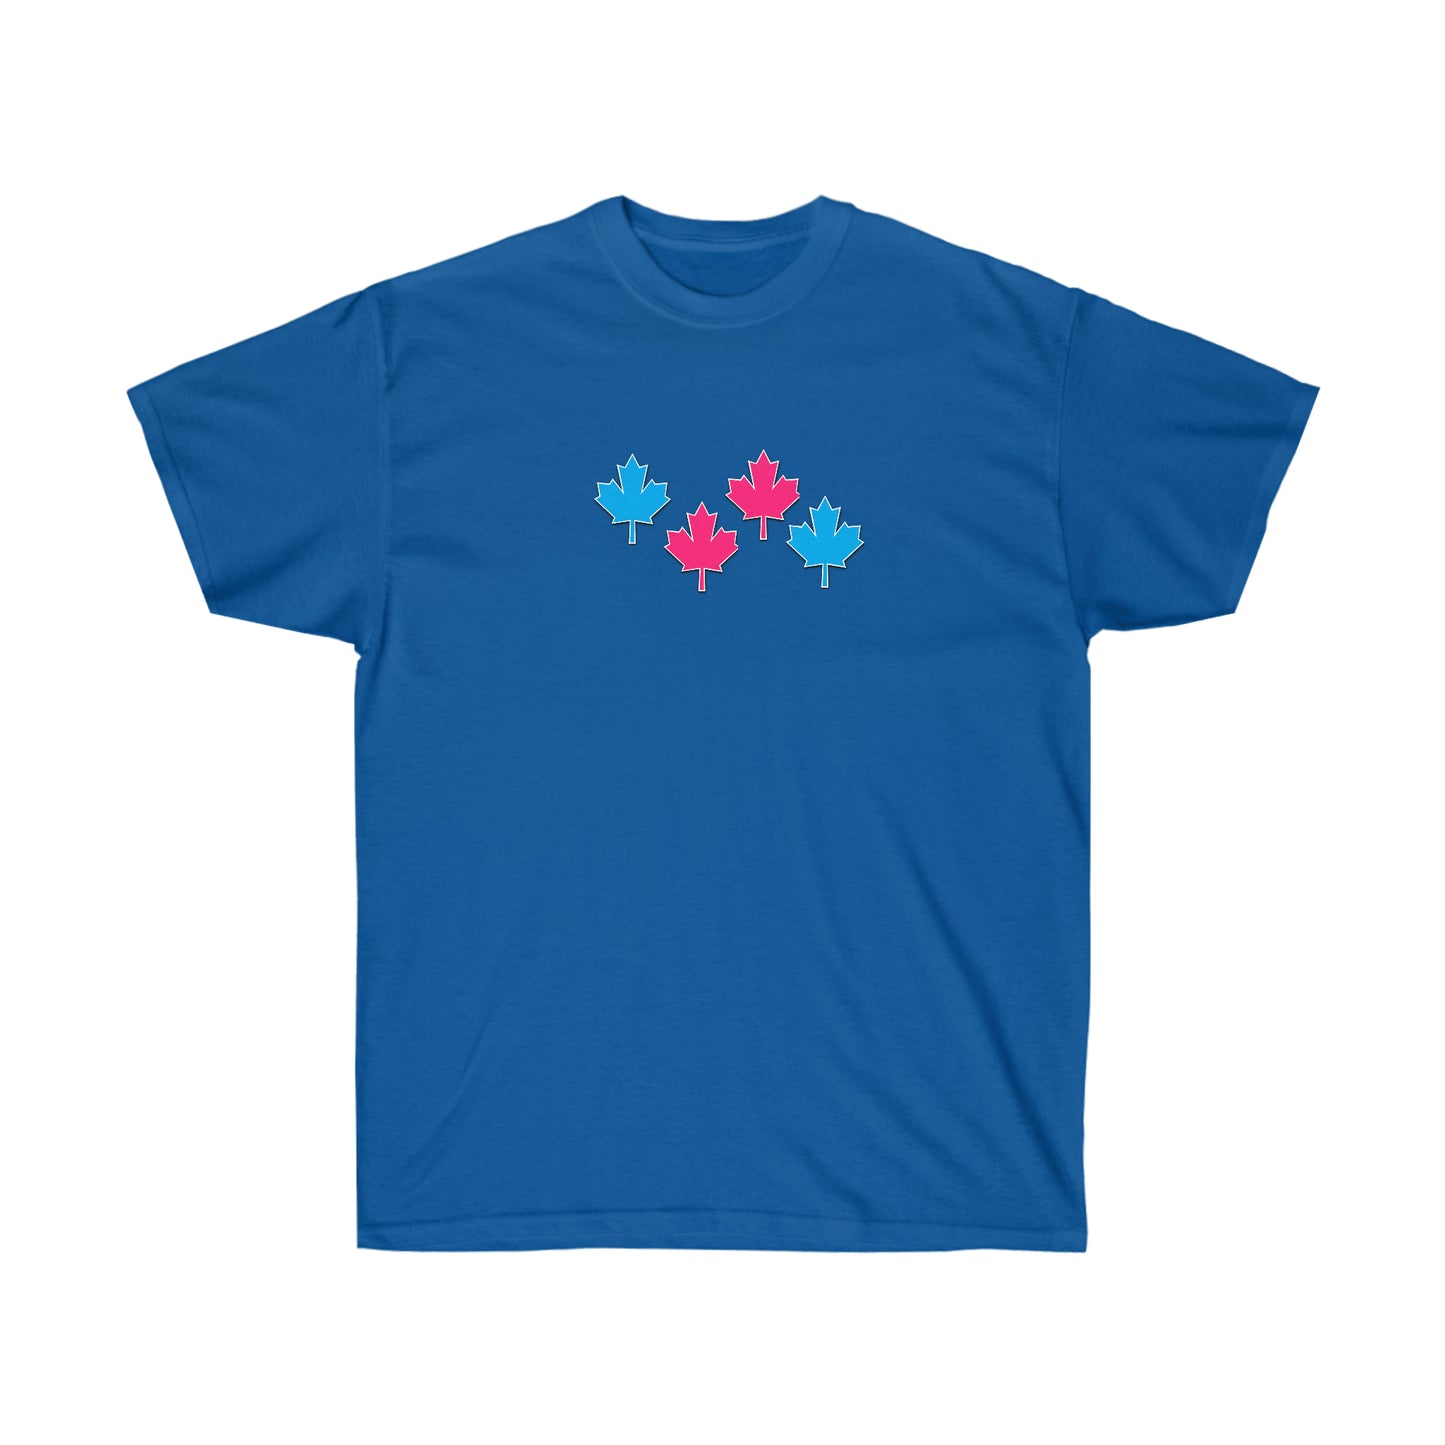 T-Shirt Gildan Unisex Cotton Tee Maple Leaf Cotton Candy Pink Blue